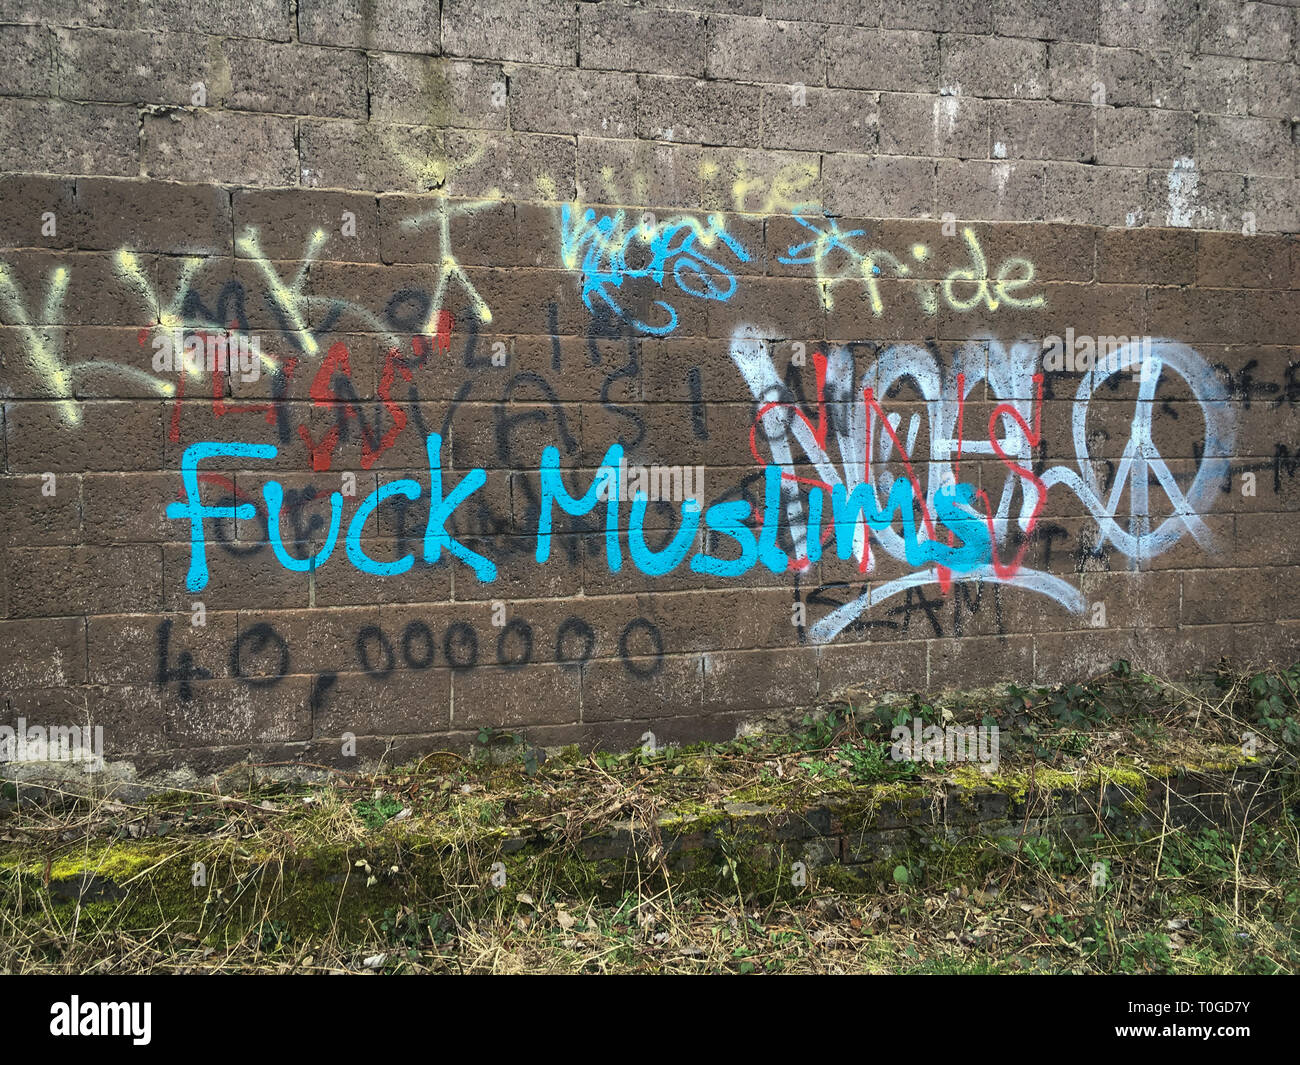 Racist graffiti, anti-muslim graffiti beside the River Clyde, in Glasgow, Scotland, 3 March 2019. Stock Photo